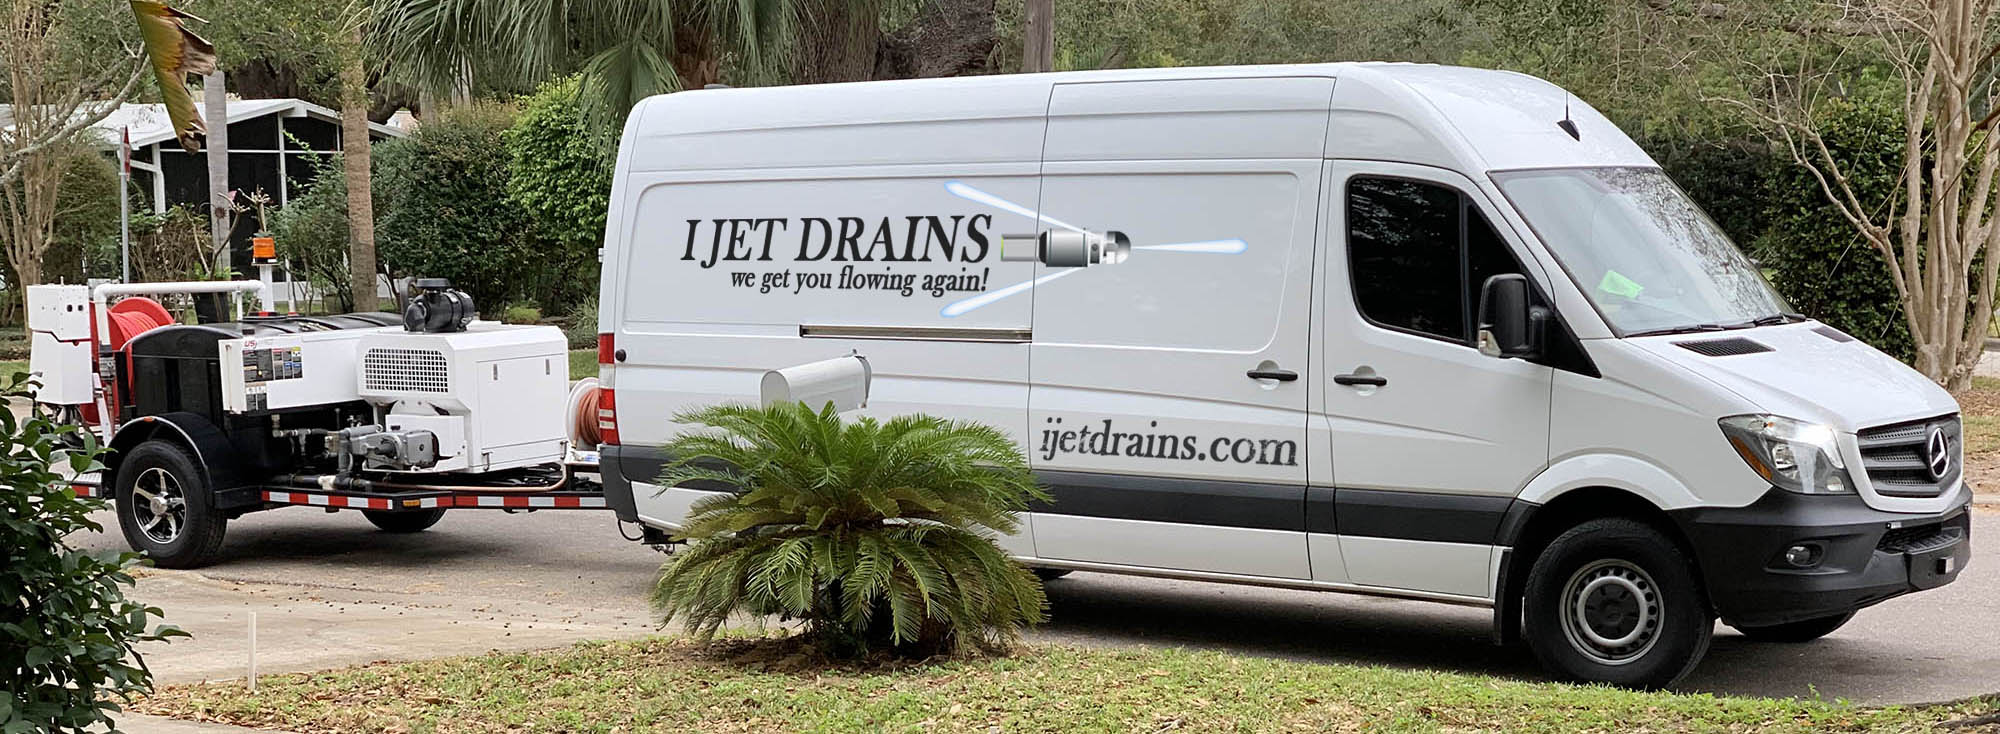 i-jet-drains-service-truck